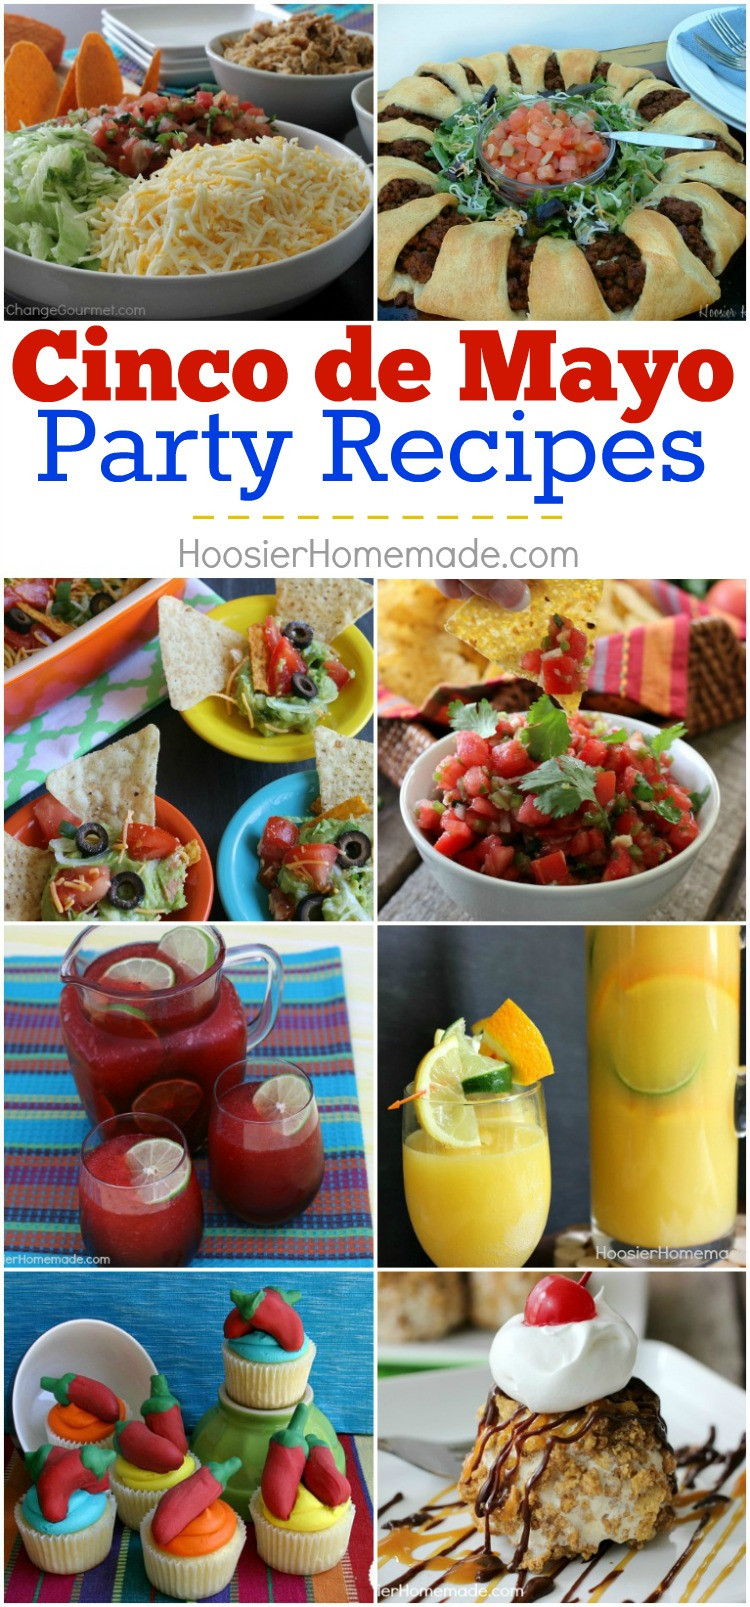 Cinco De Mayo Party Recipes
 Cinco de Mayo Party Recipes Hoosier Homemade